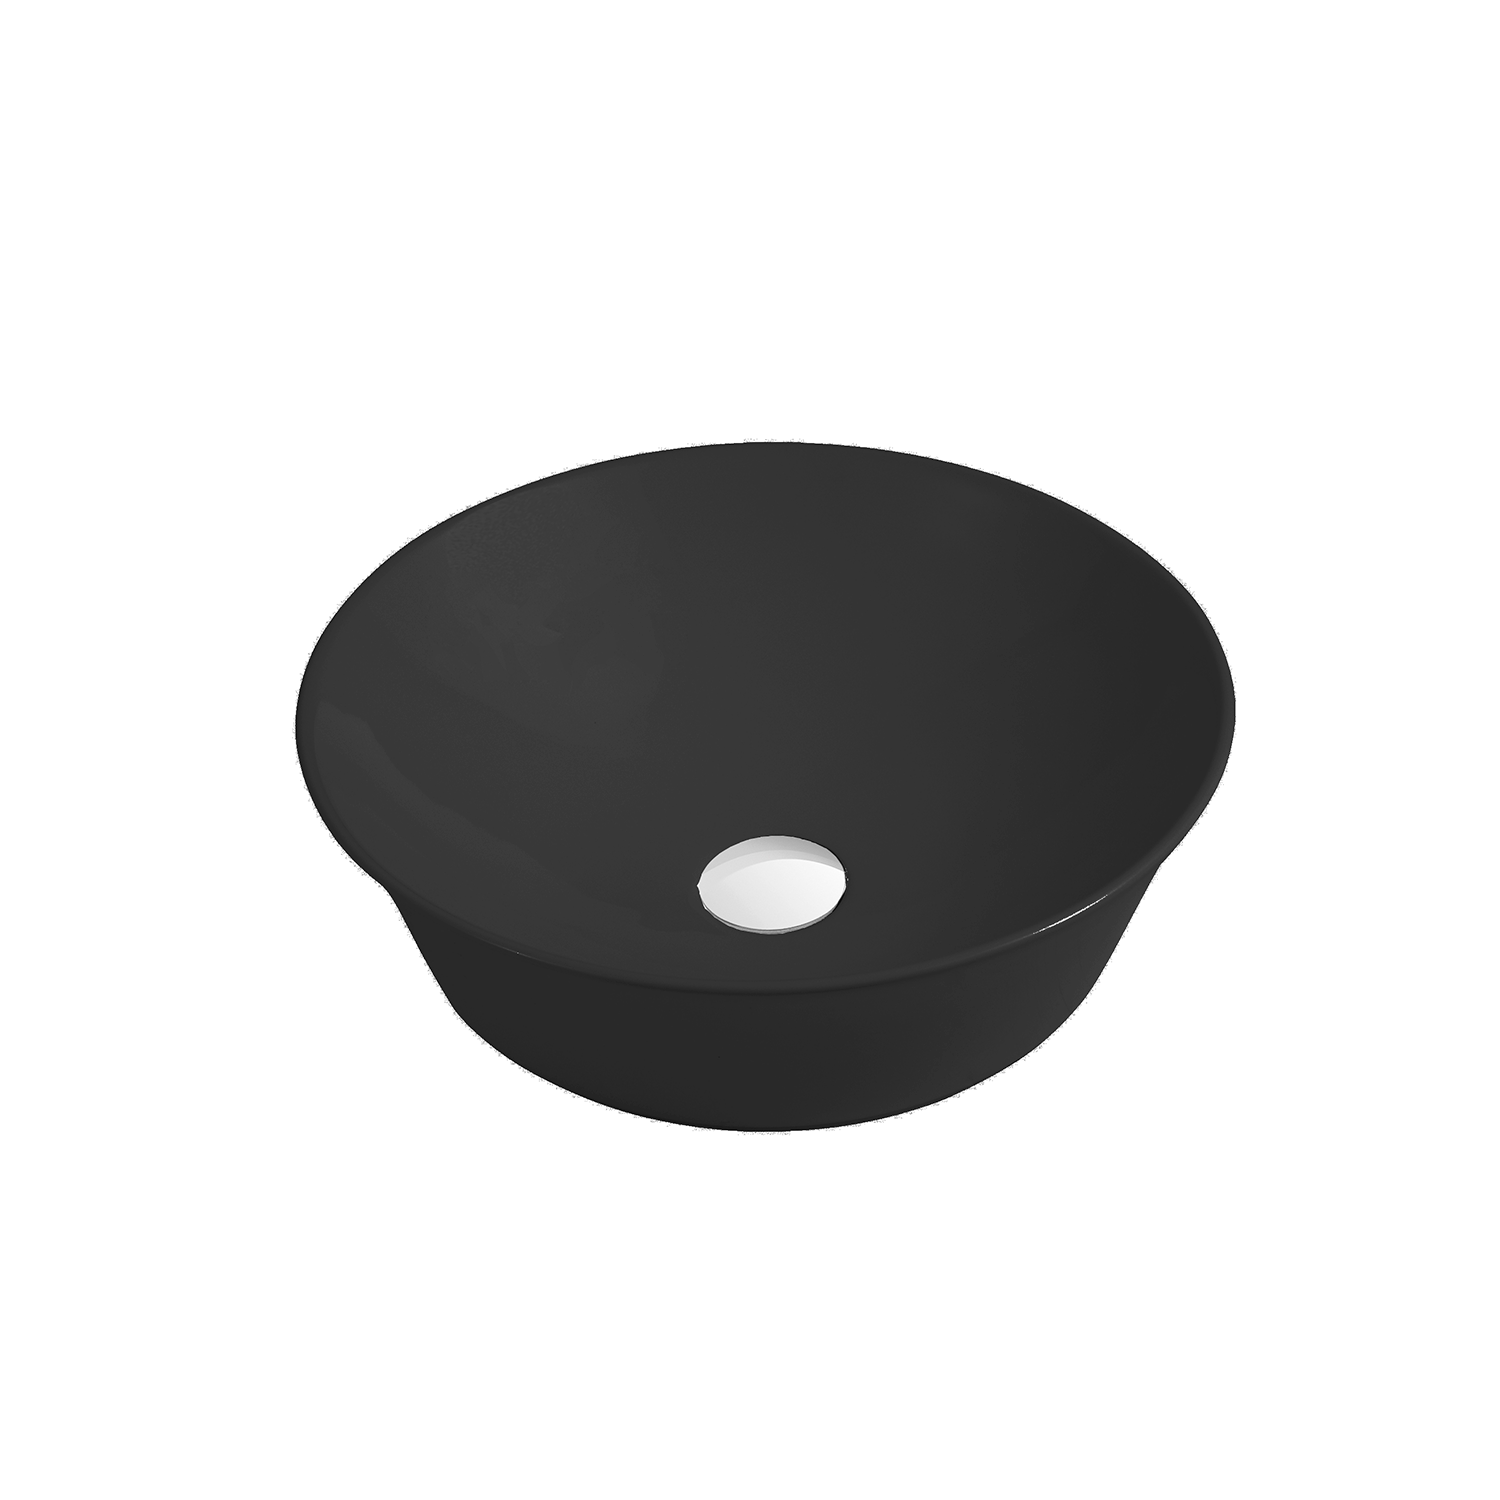 Lavabo redondo de cerámica para baño DAX - (16.5 "de diámetro) (DAX-CL1329)